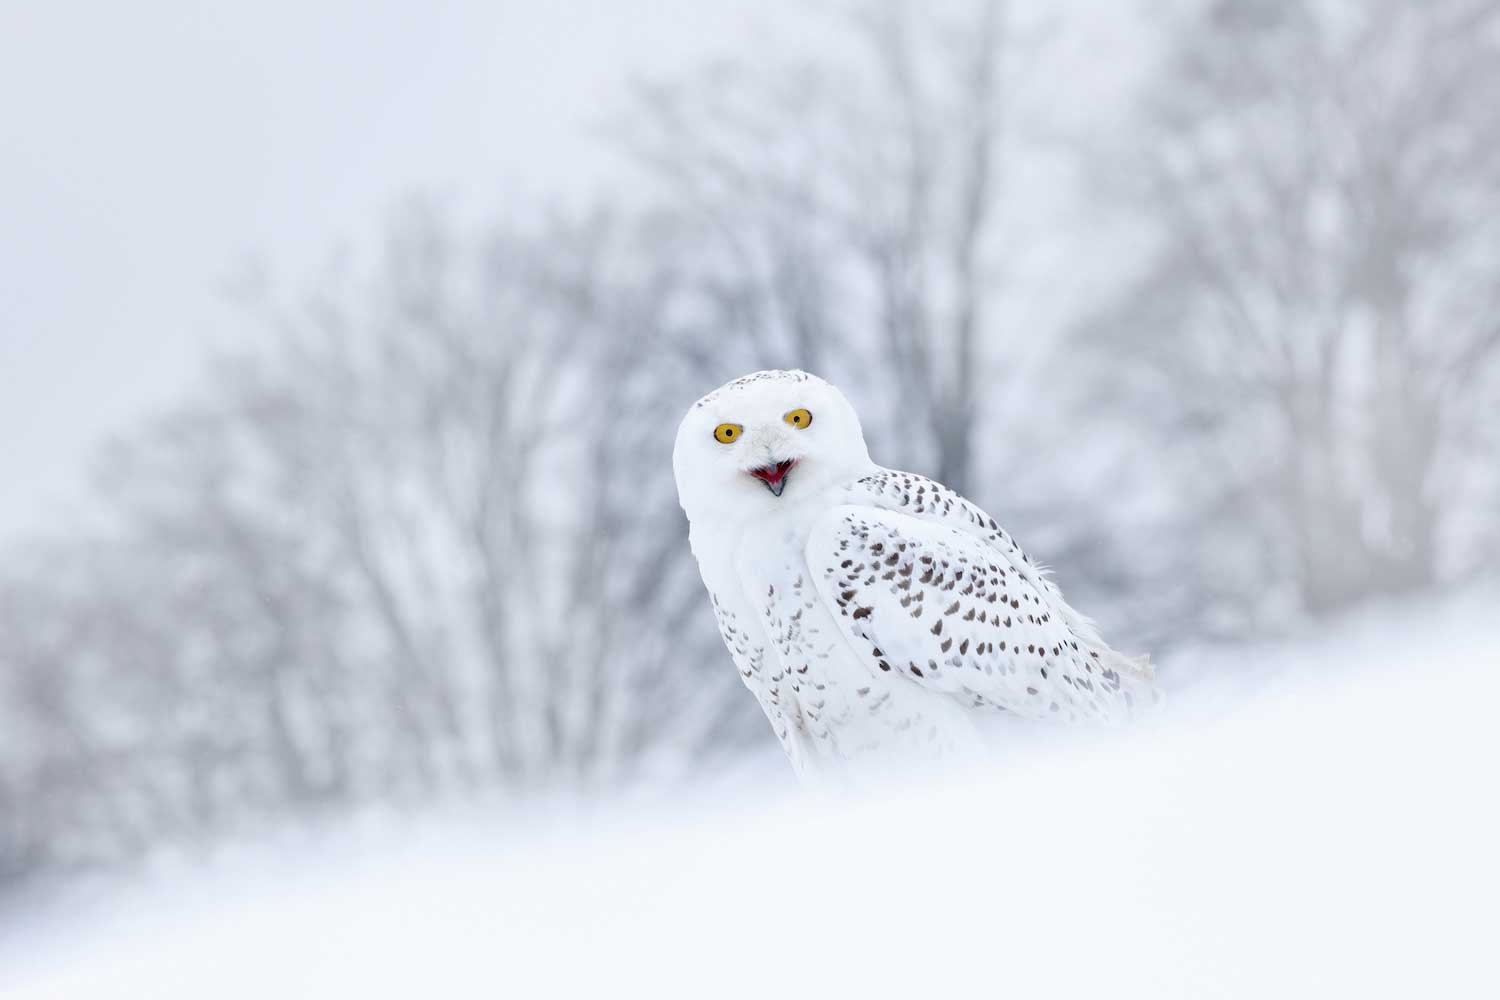 A snowy owl in a snowy landscape.